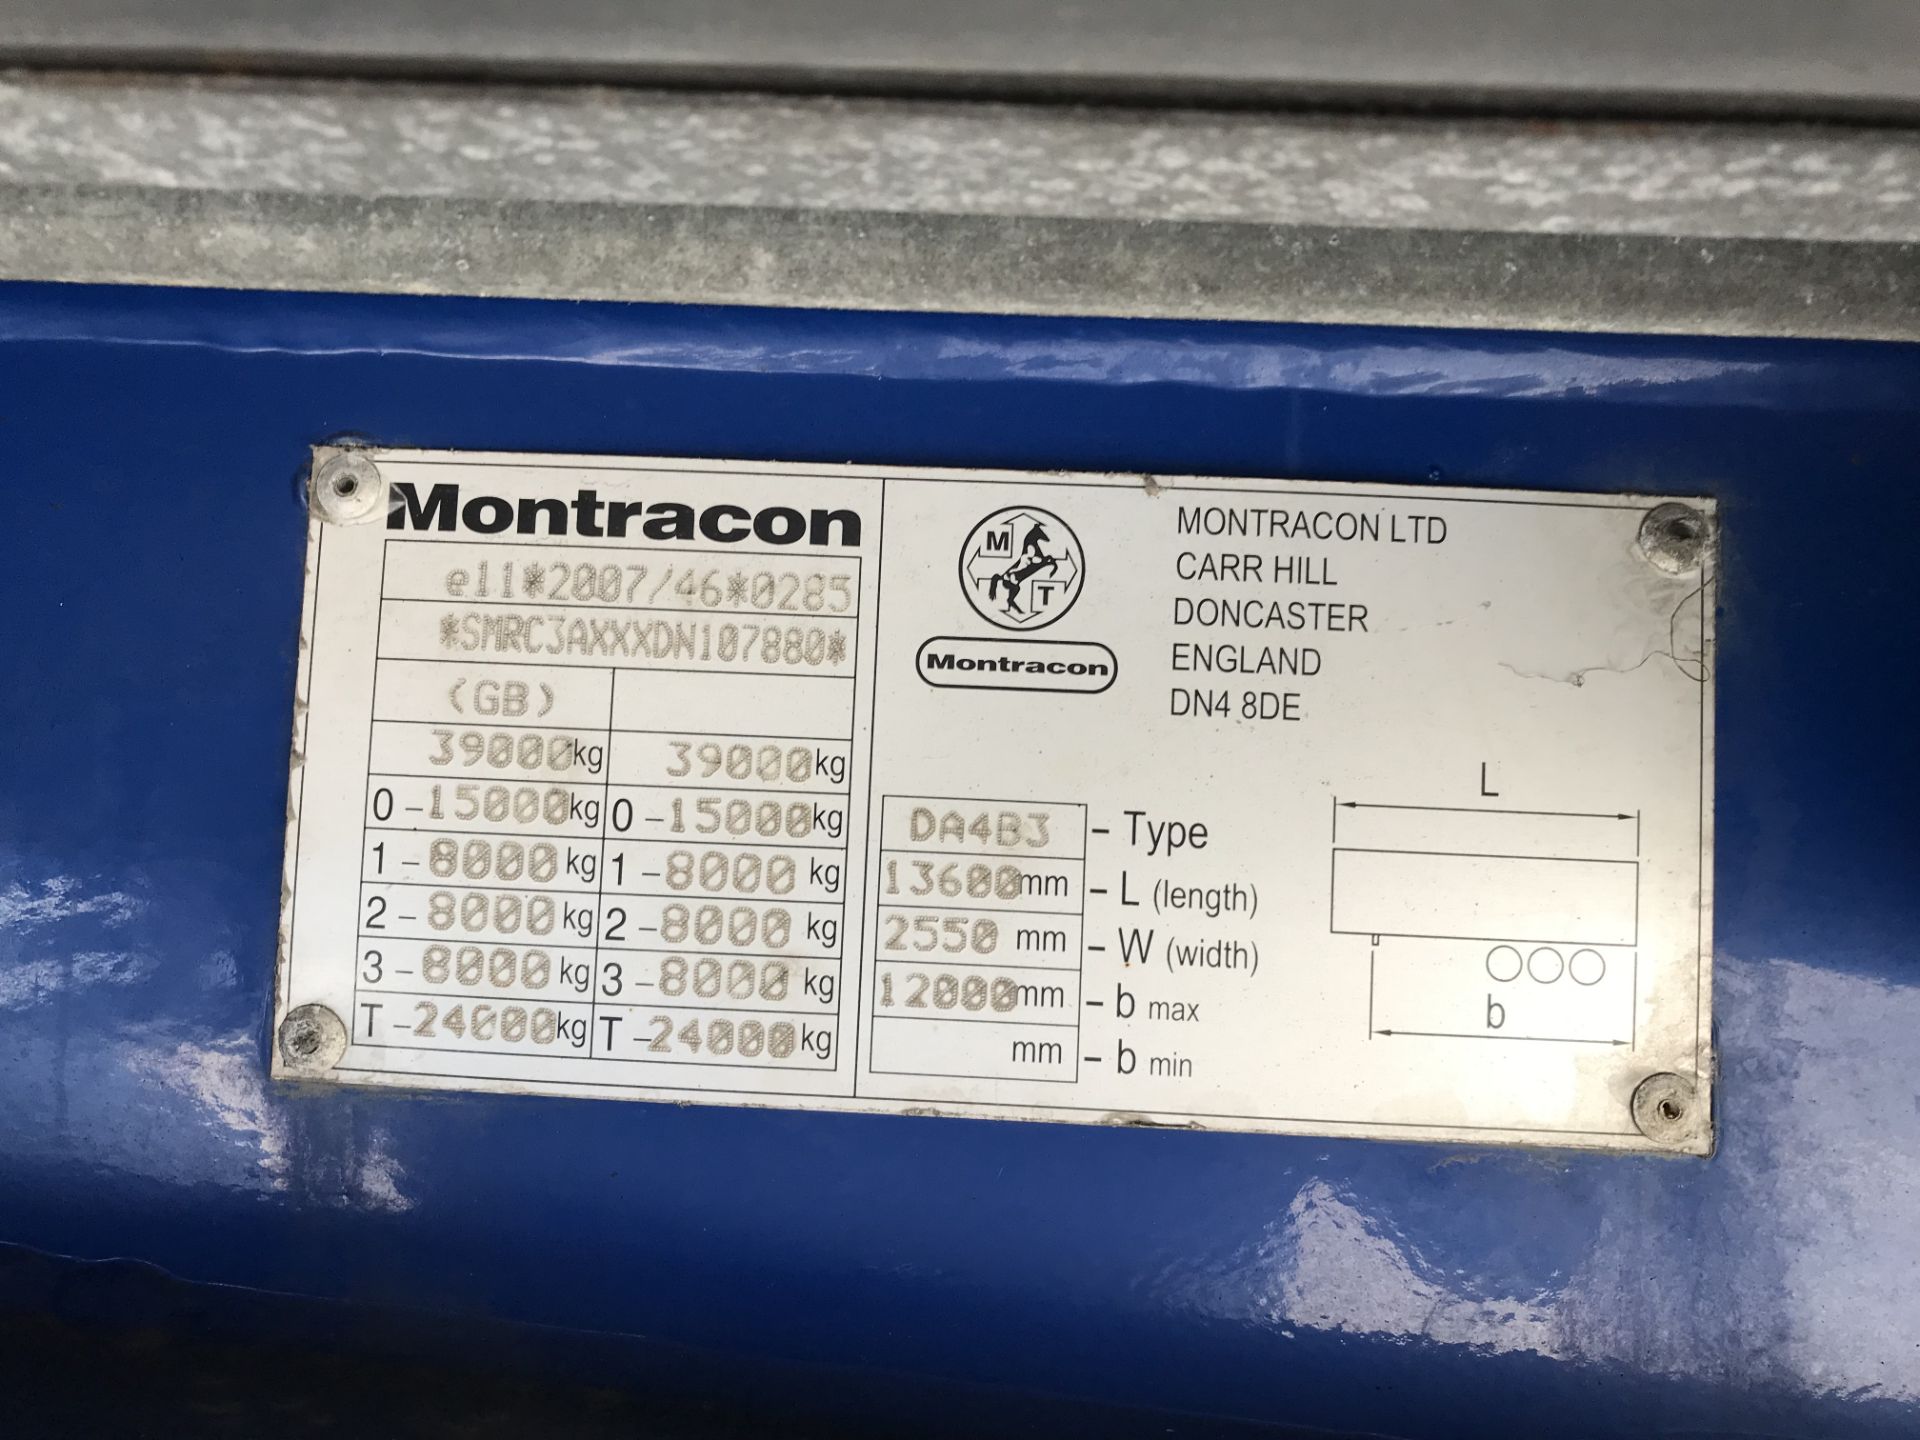 Montracon 13.6m Tri-Axle Curtainside Single Deck Semi-Trailer, chassis no. SMRC3AXXXDN107880, ID no. - Image 6 of 6